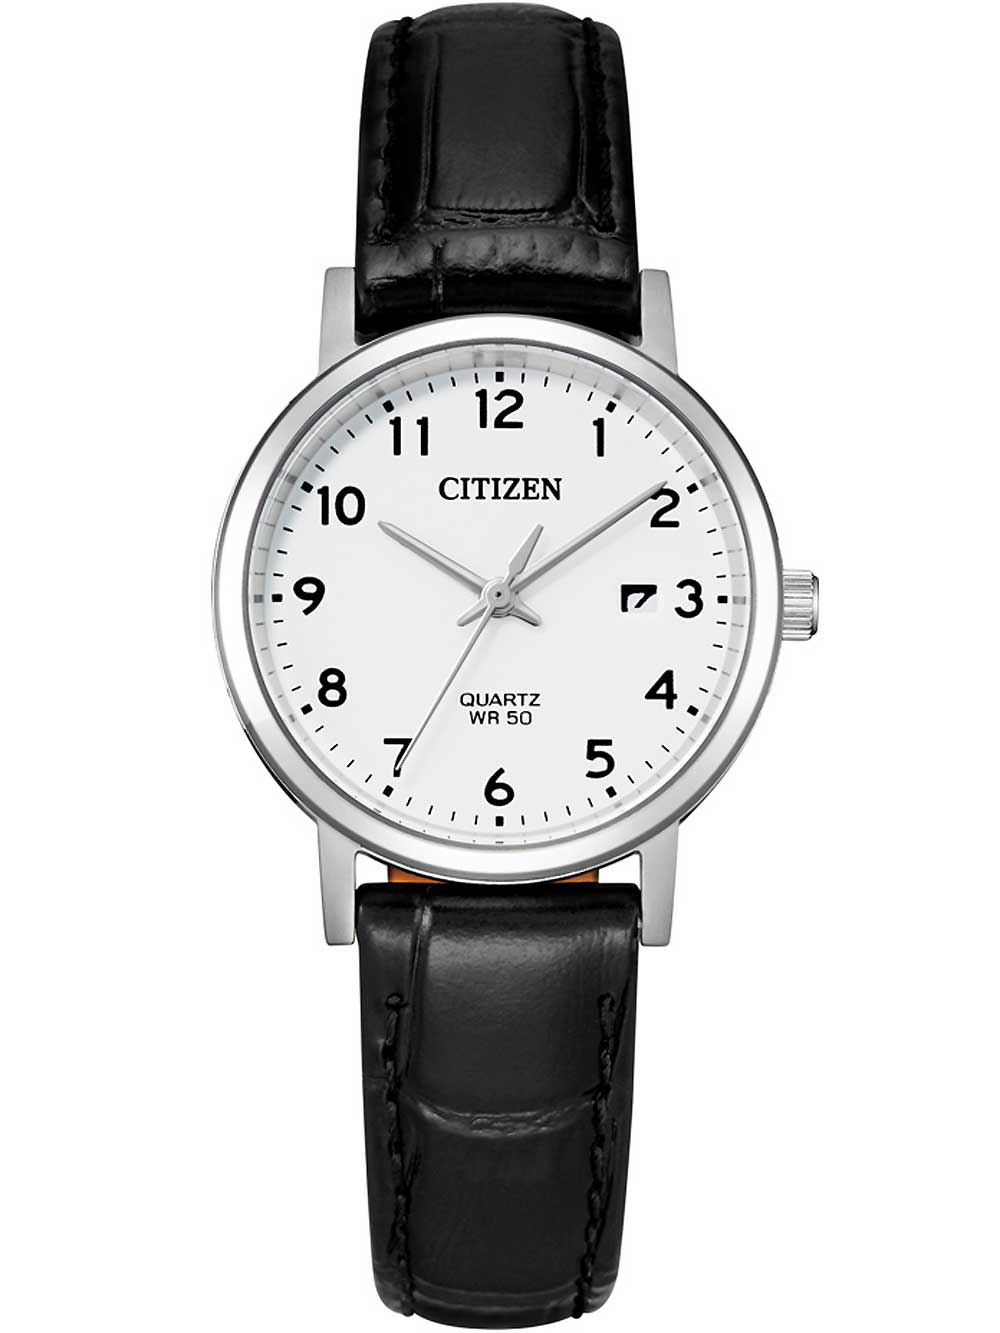 Citizen EU6090-03A cheap shopping: Basic watch Ladies Timeshop24 28mm quartz Ladies